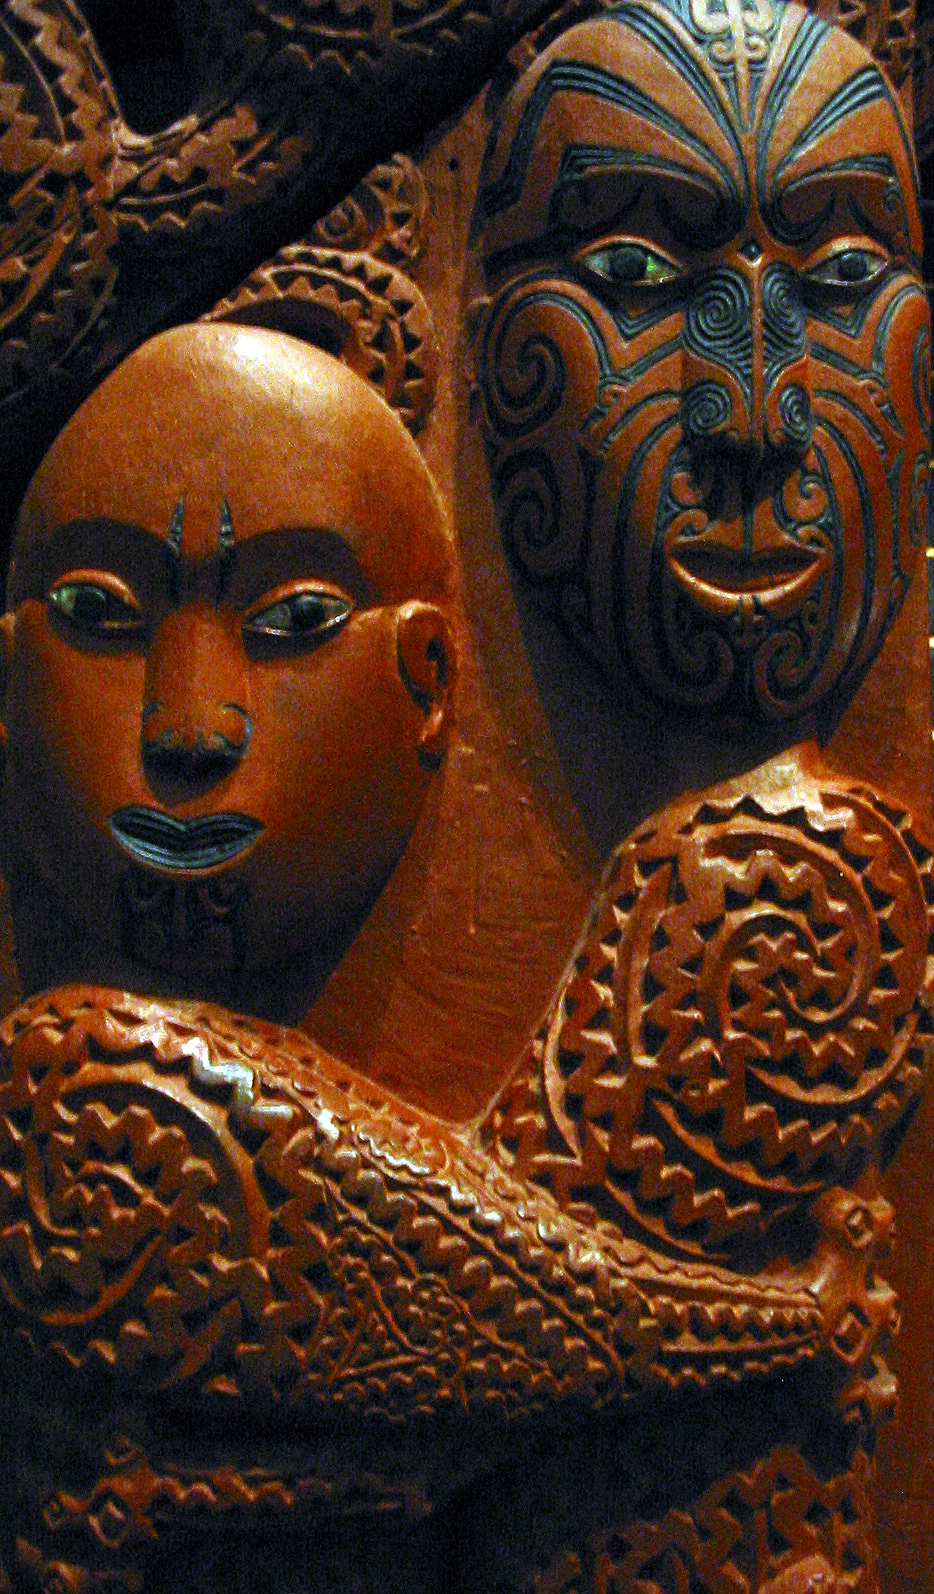 Maori creation myth